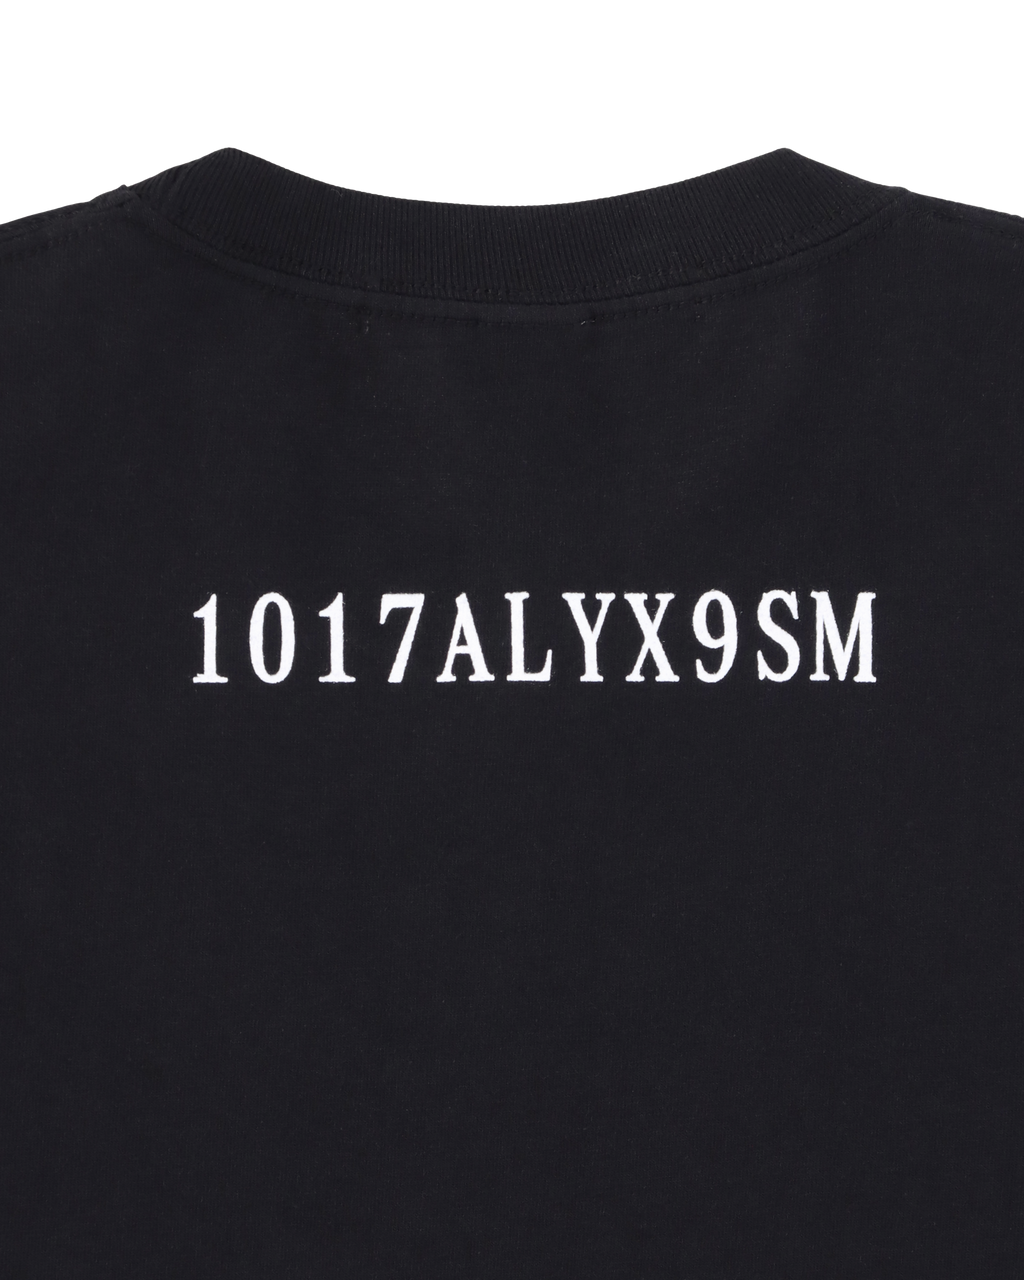 1017 ALYX 9SM | 1017 ALYX 9SM COMPILATION V1 - SS T-Shirt | T-SHIRTS